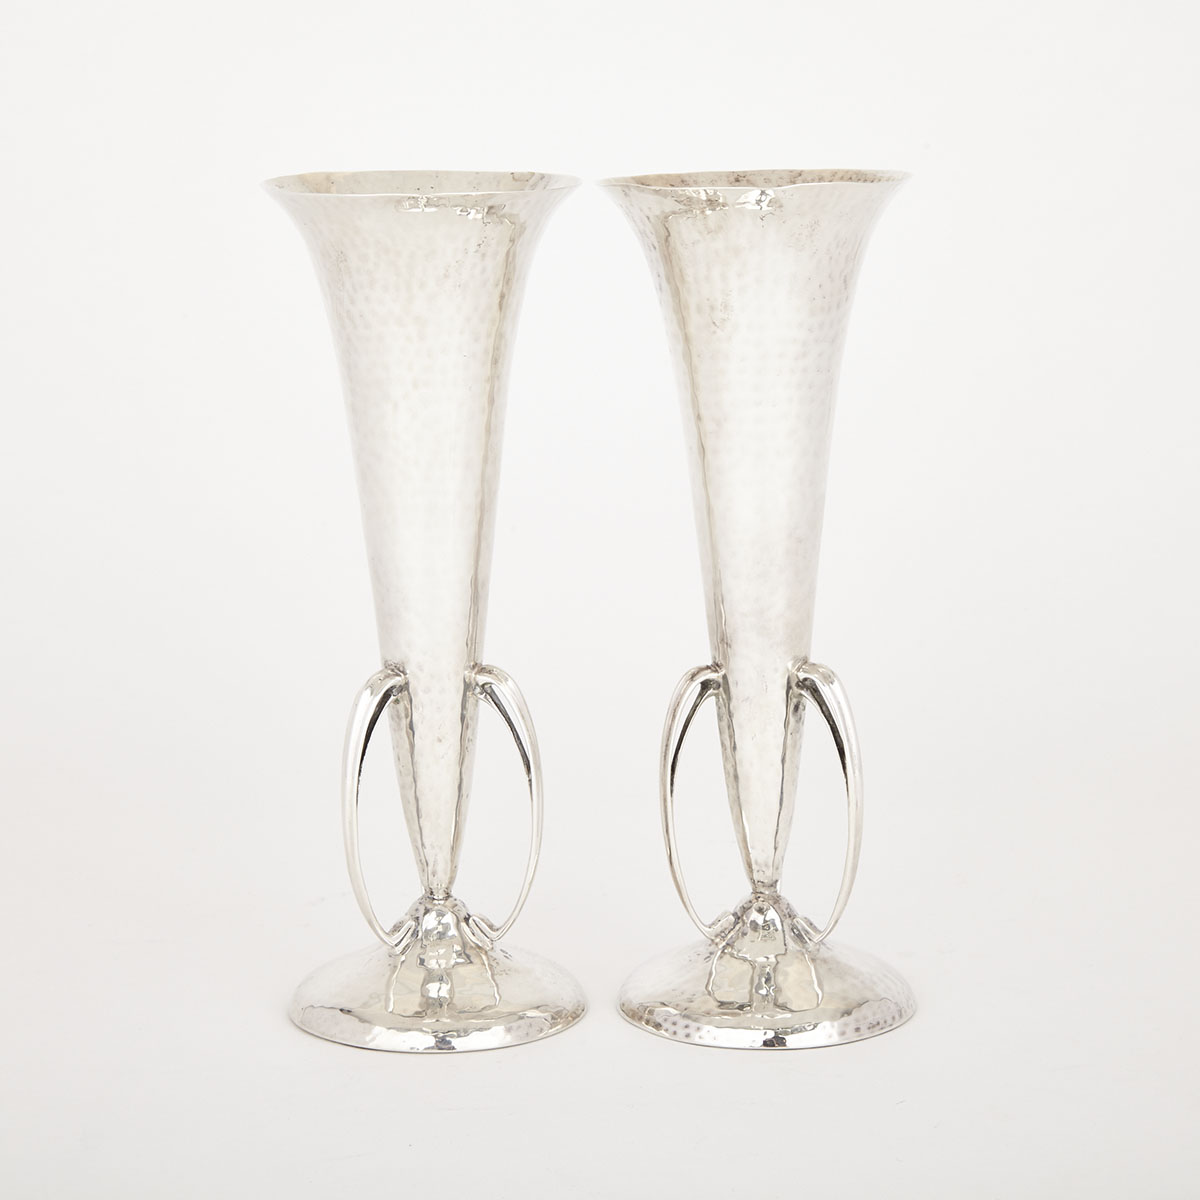 Pair of Scottish Arts and Crafts Silver Vases, John Alexander Fettes, Glasgow, 1913